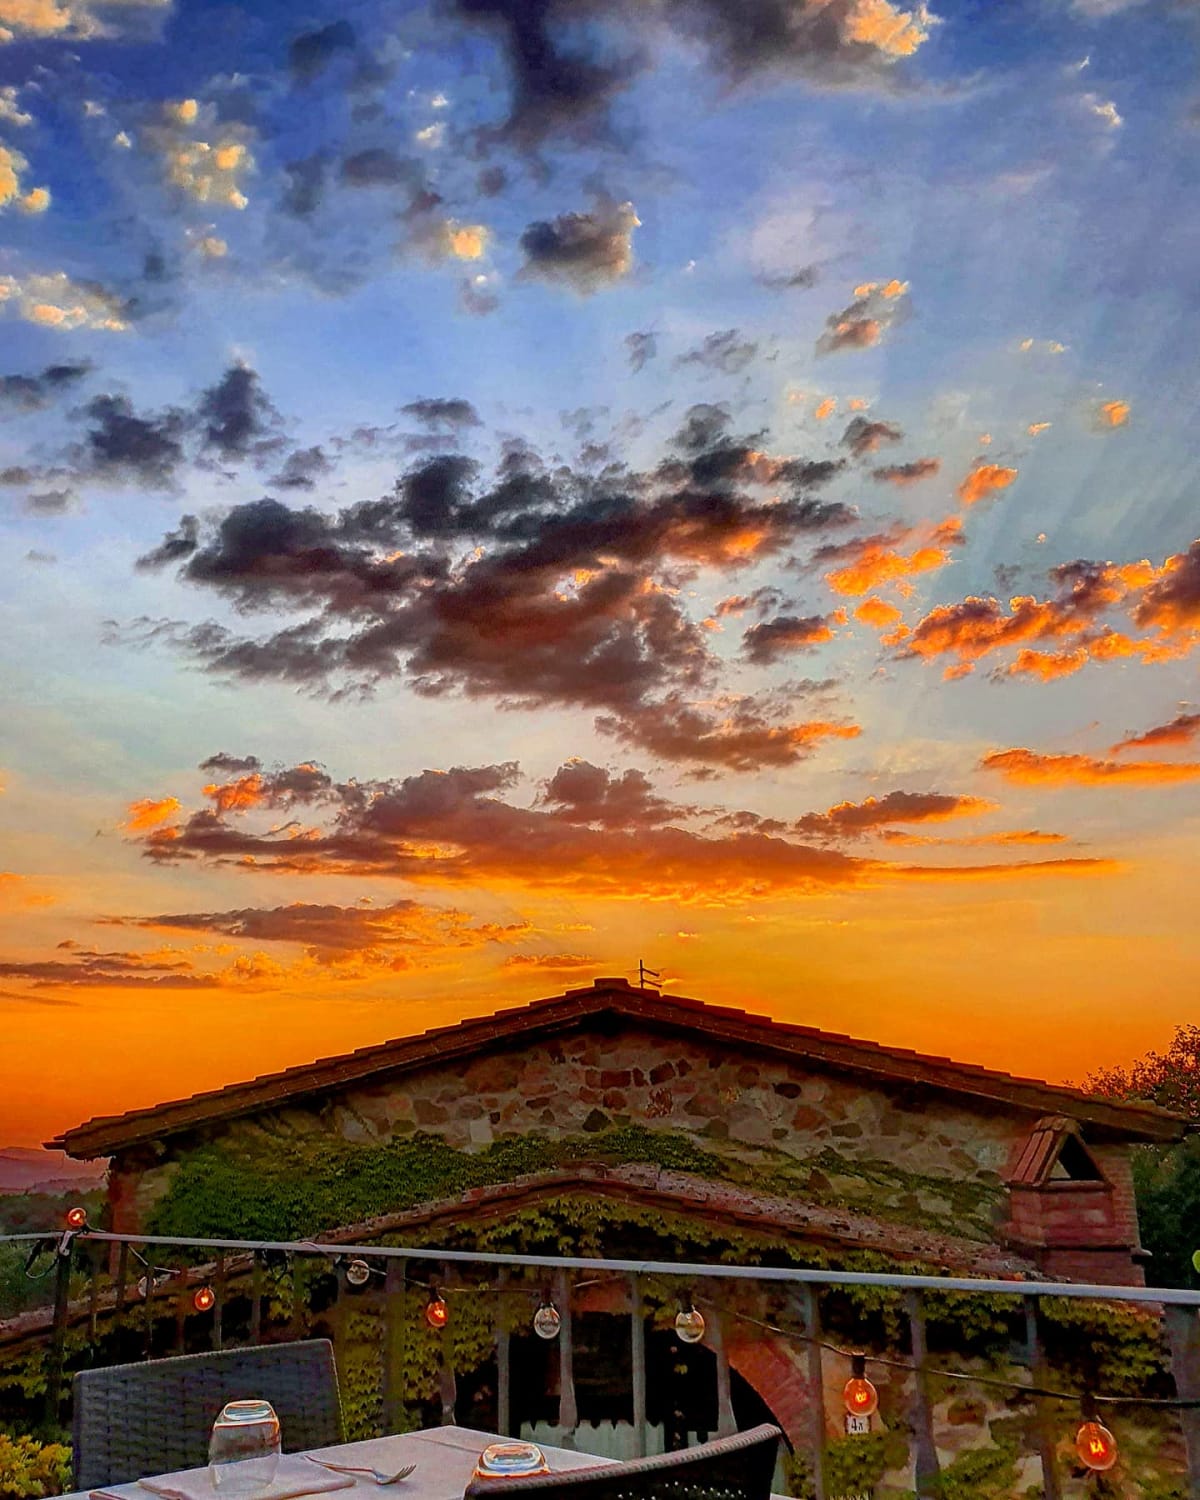 Stunning sunset in Chianti hills (Tuscany, Italy)